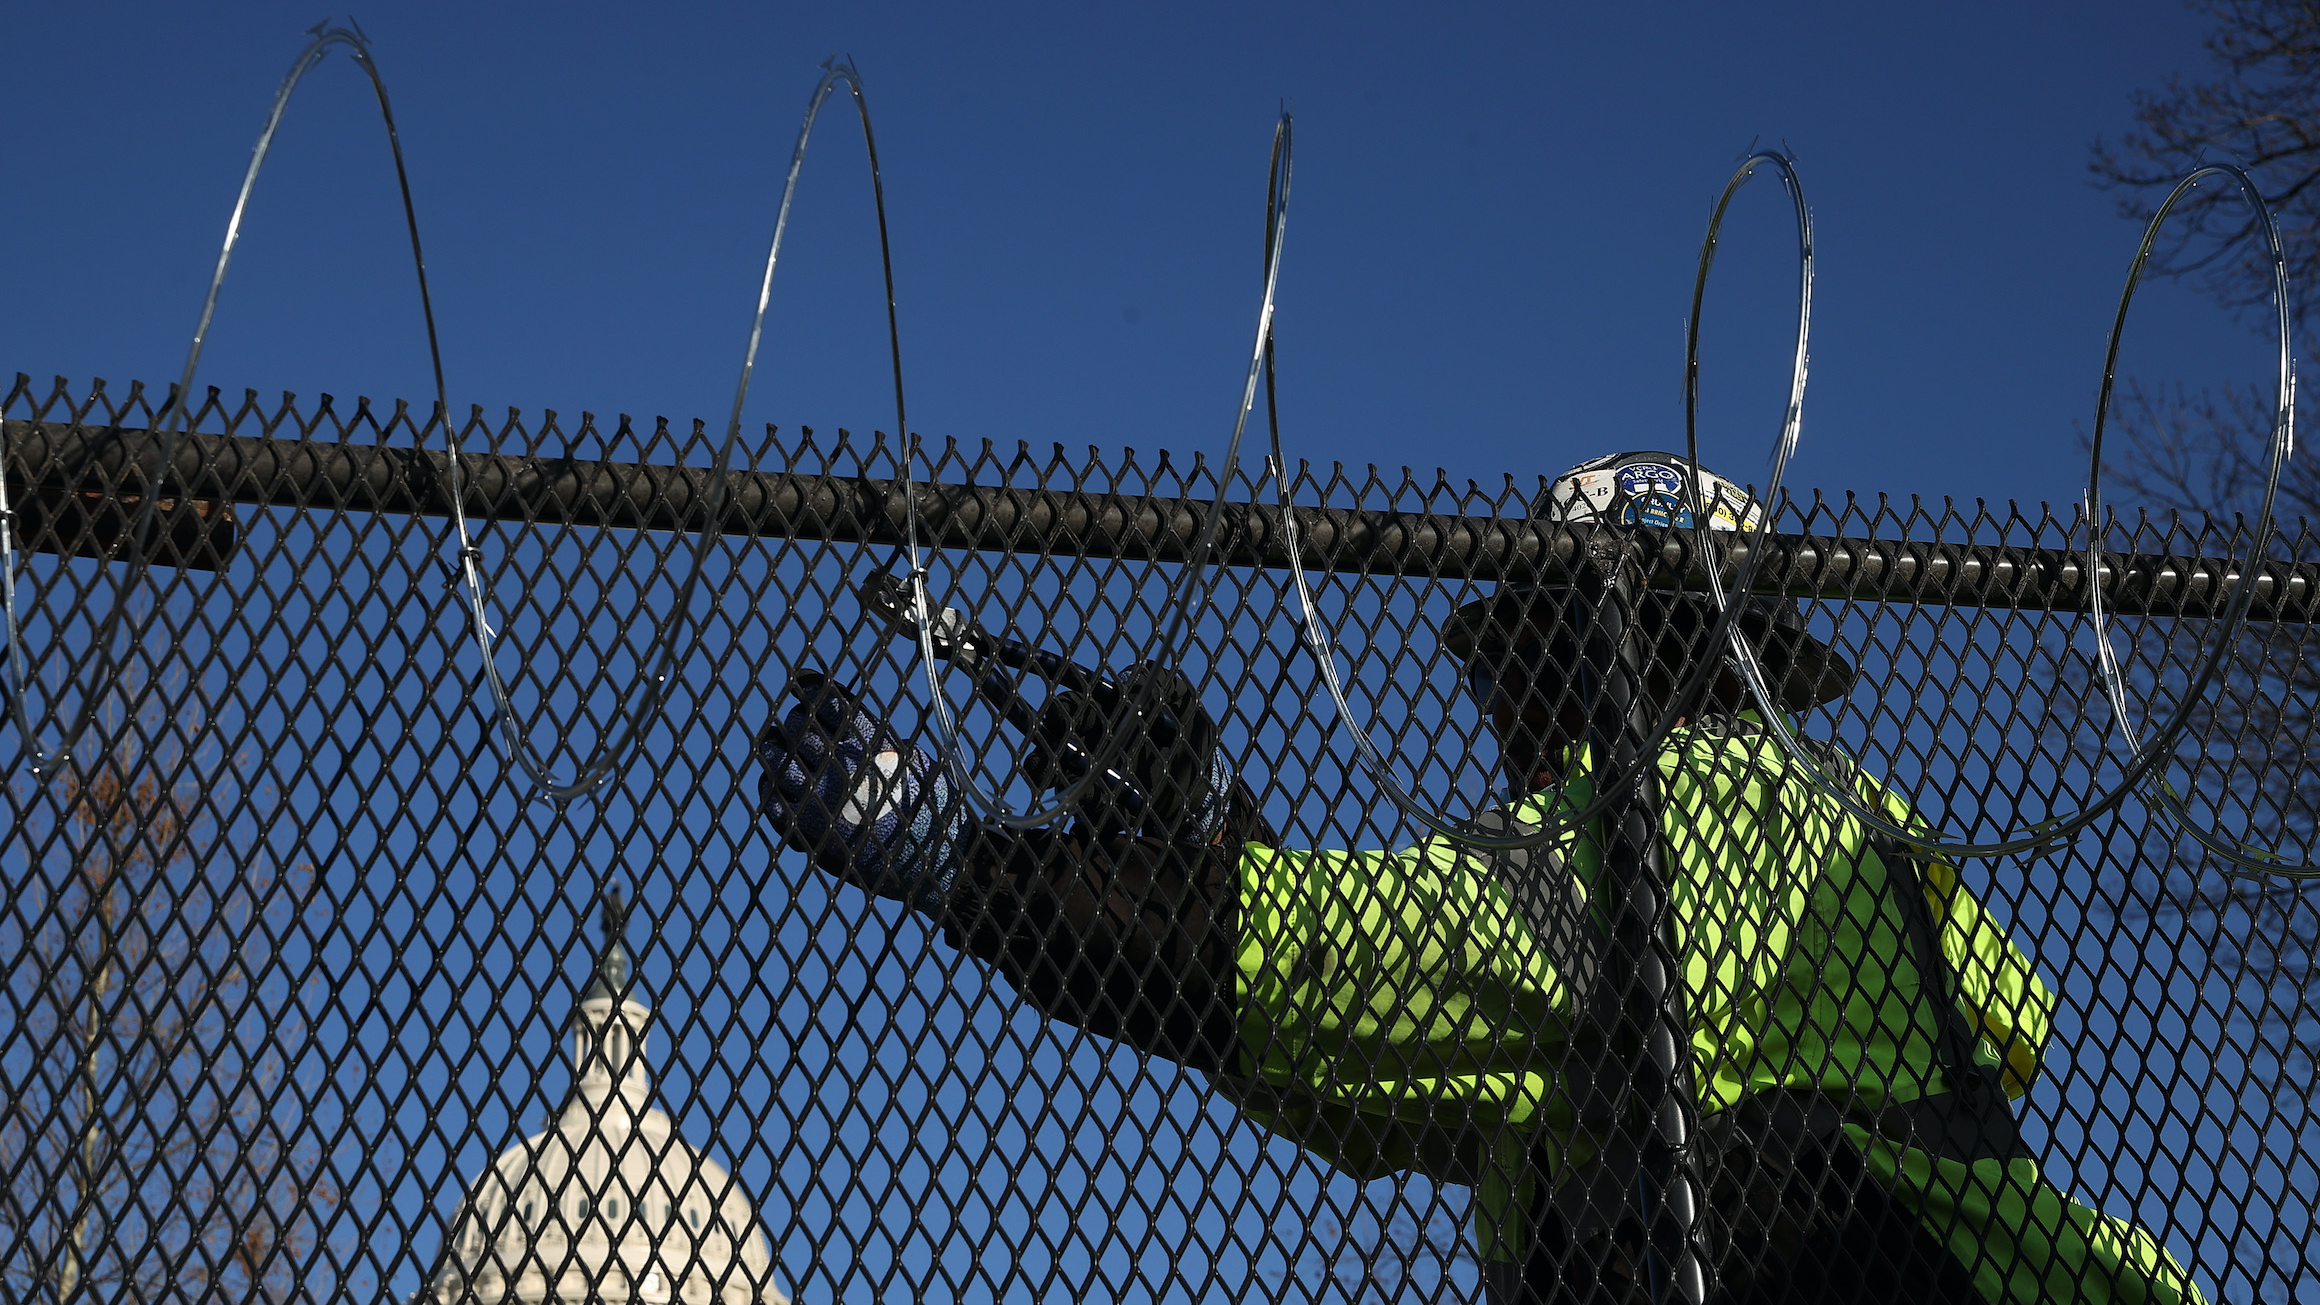 Razor wire fence installation